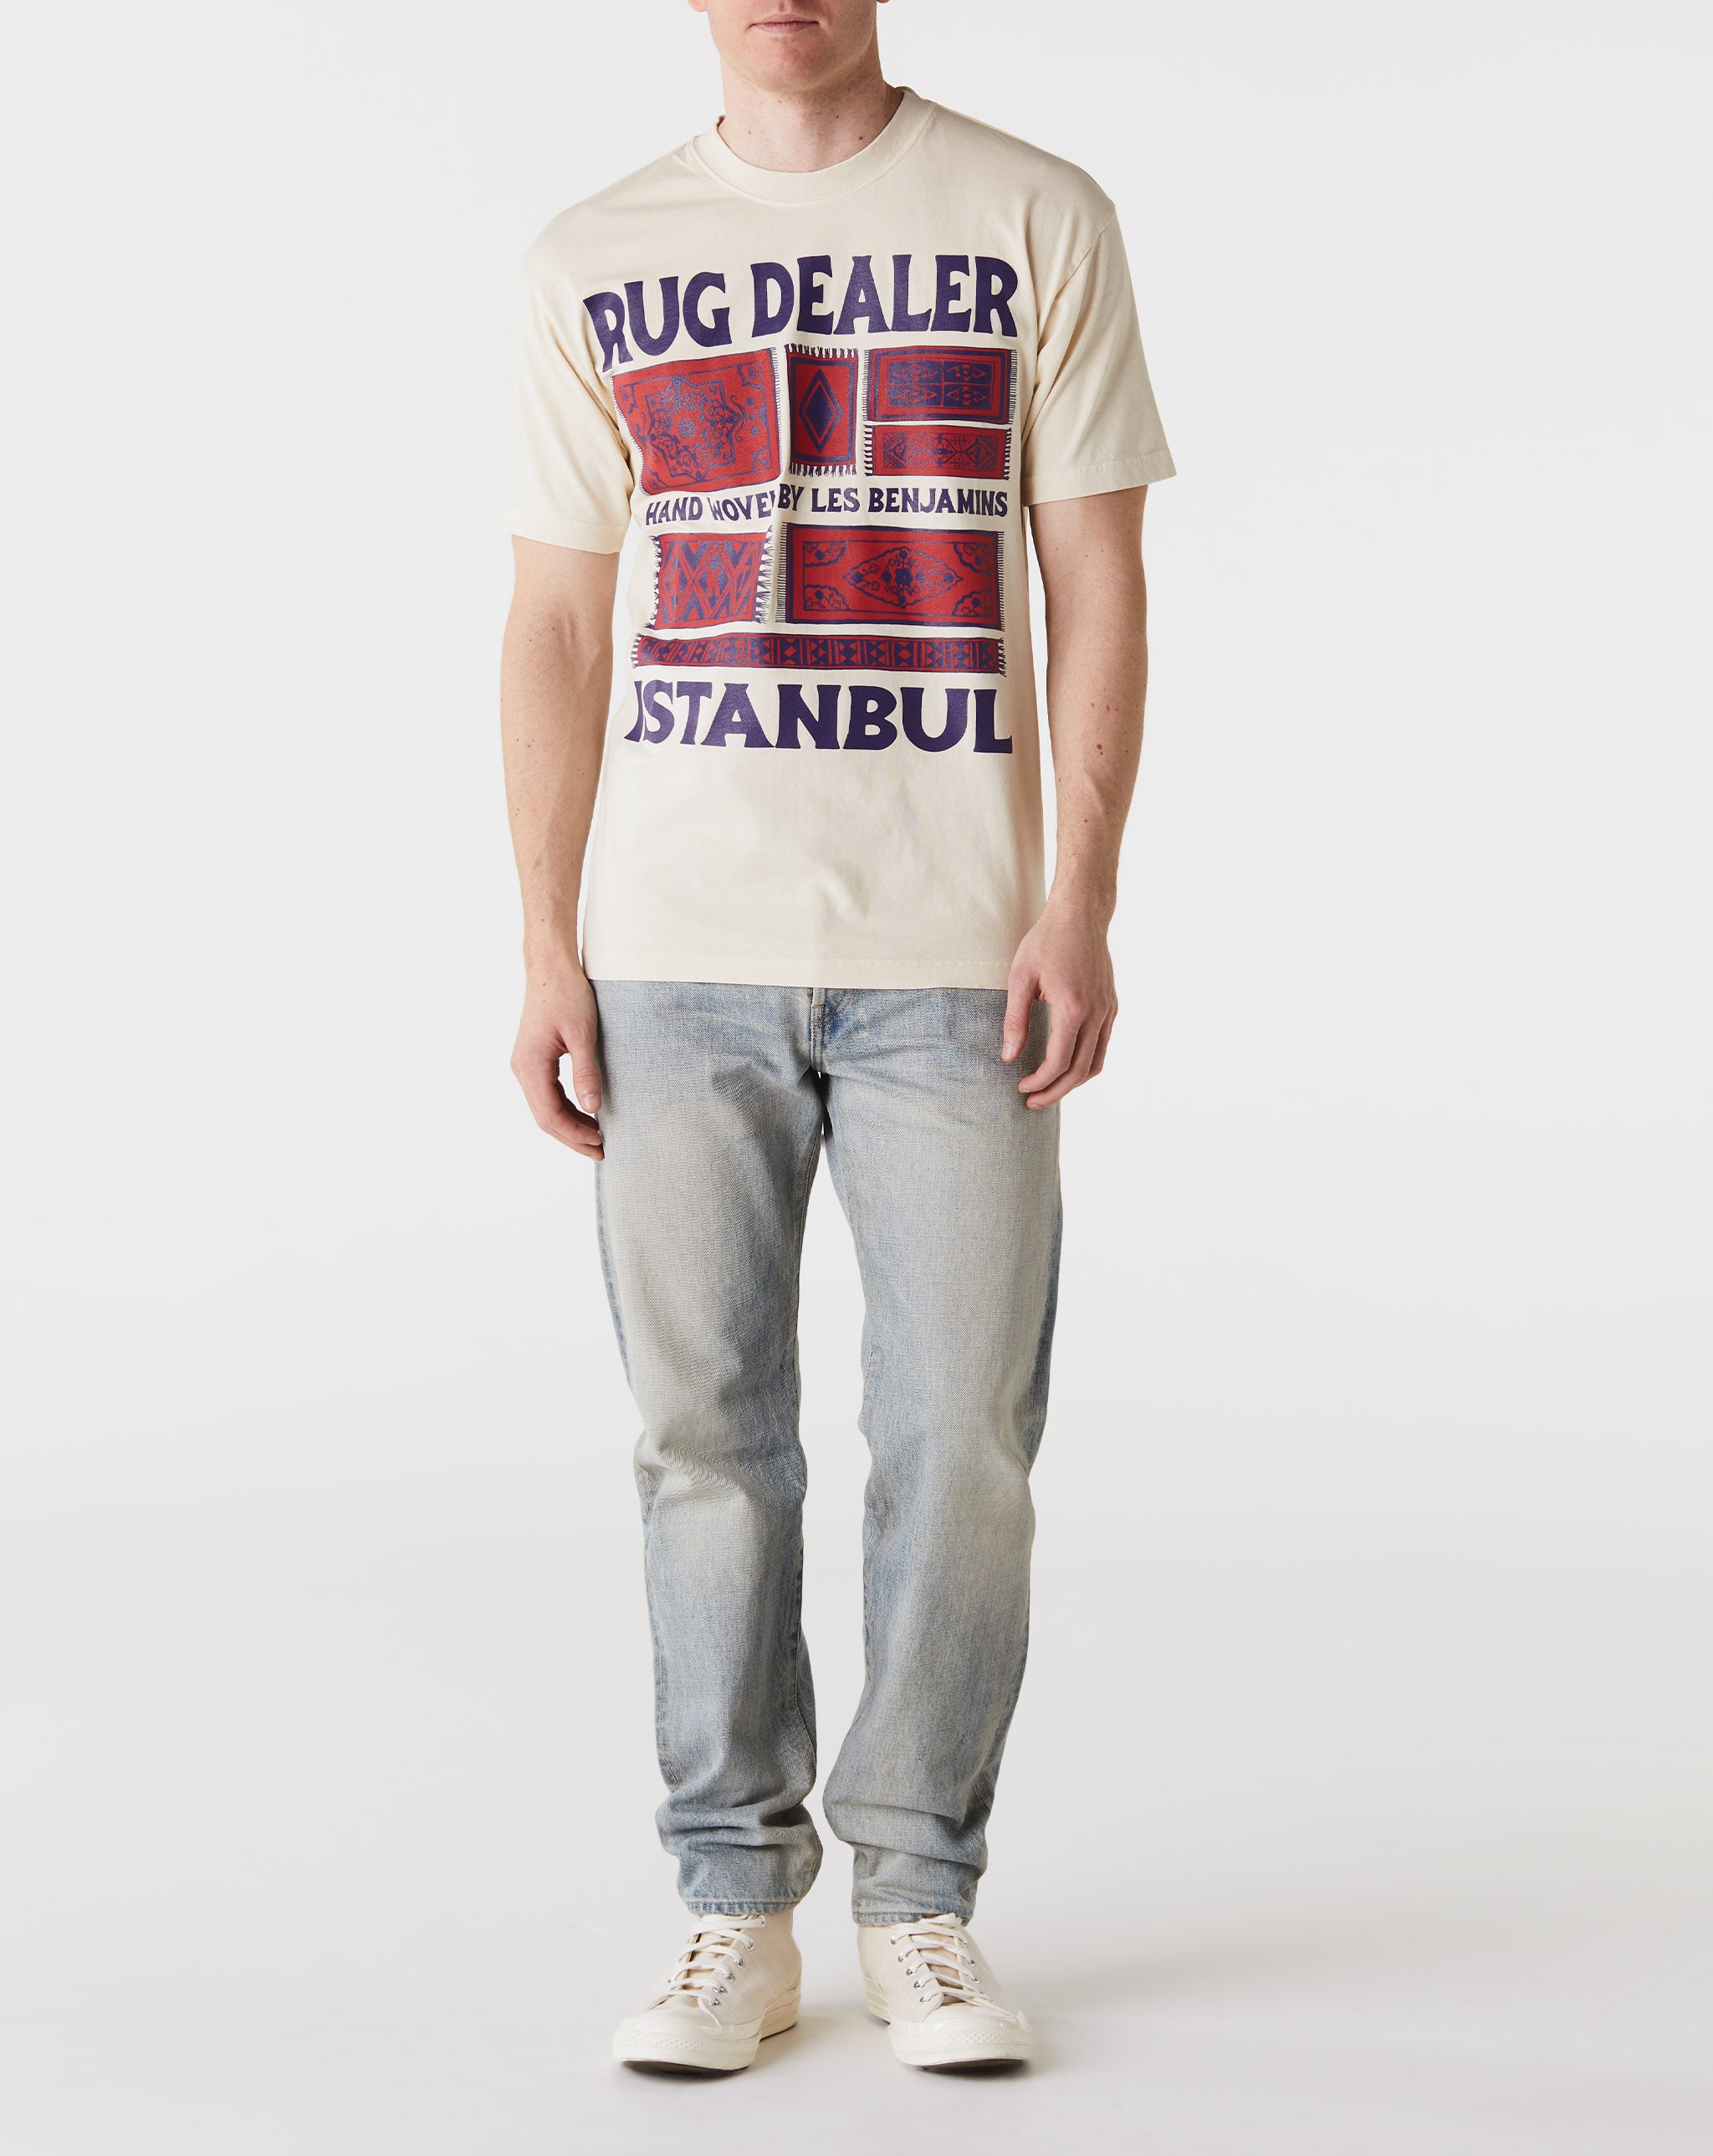 Market Rug Dealer Istanbul T-Shirt - Rule of Next Apparel